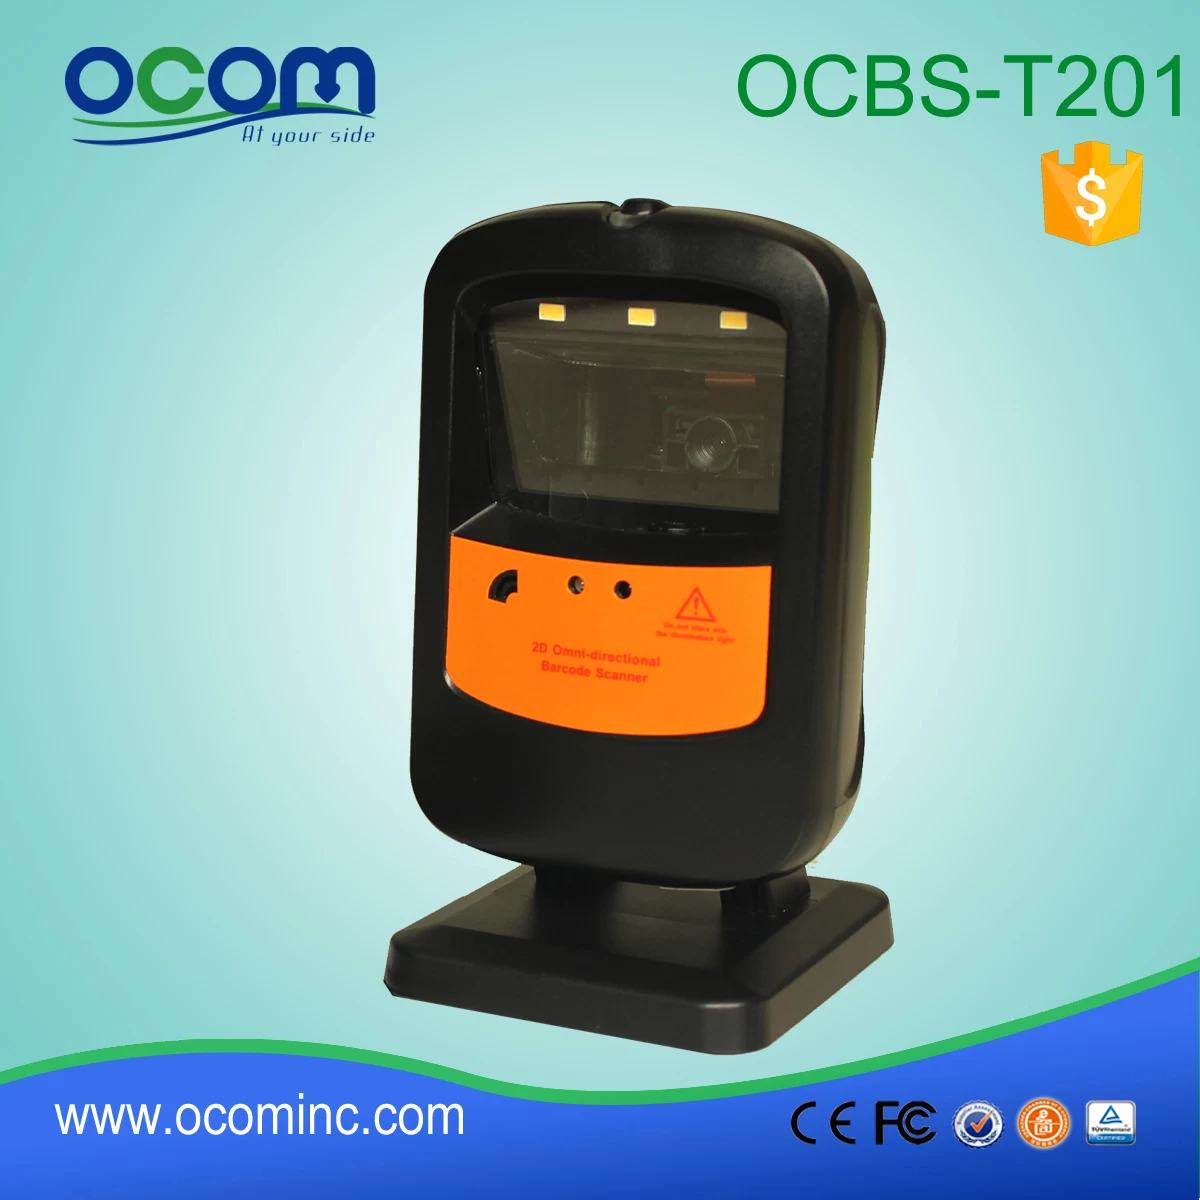 OCBS-T201:omnidirectional barcode scanner price, barcode reader module